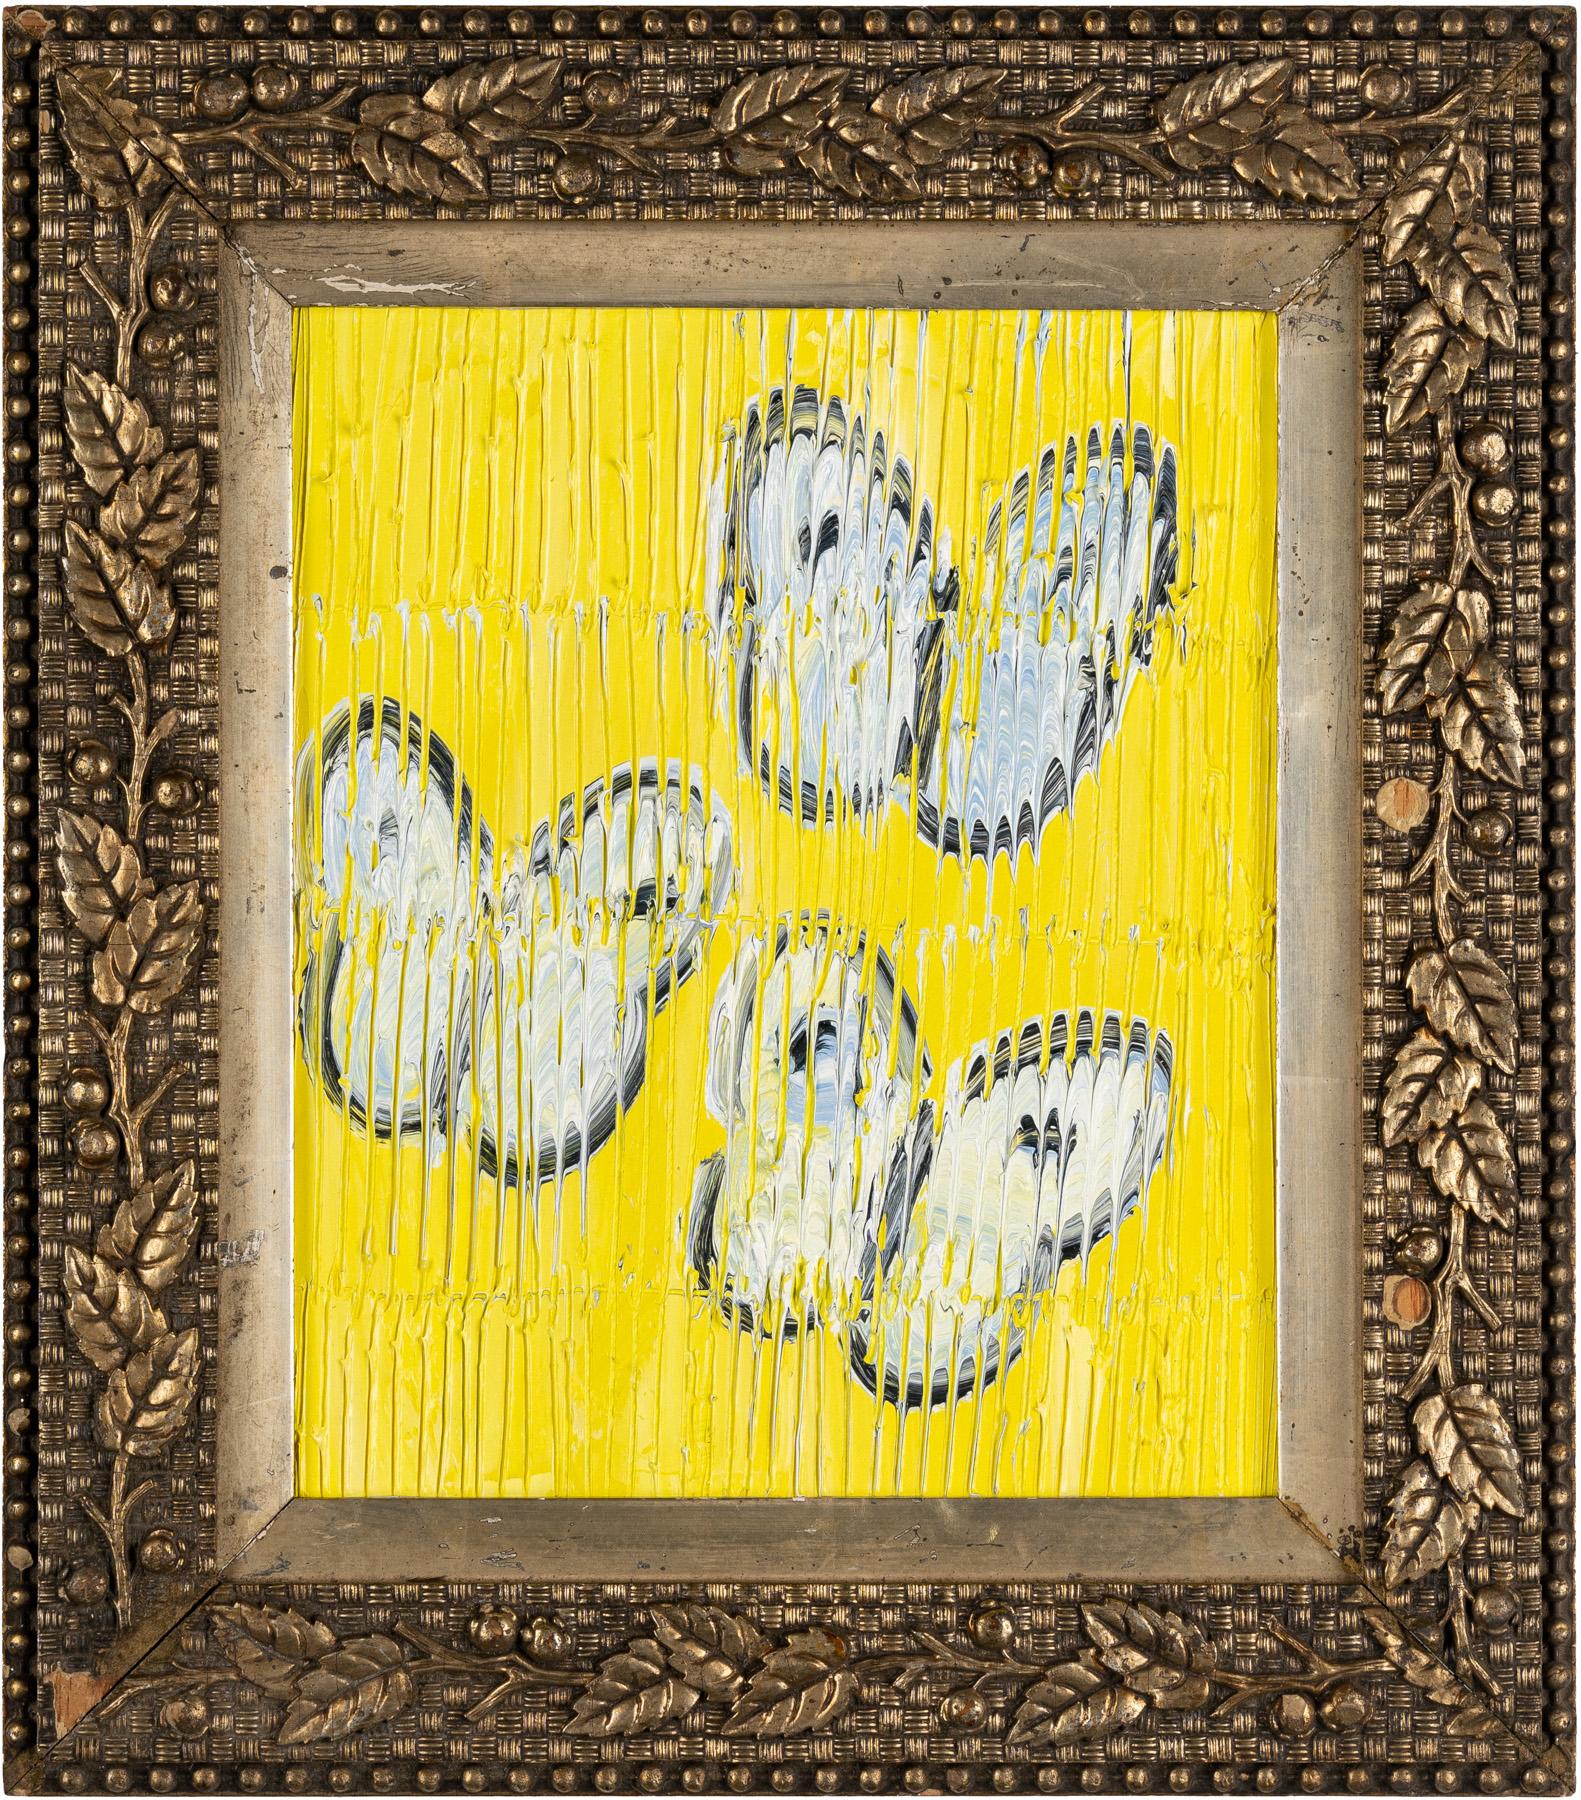 Hunt Slonem "3 Flights" White Butterflies on Yellow
Black outlined white butterflies on a yellow etched background in an antique frame.

Unframed: 12.5 x 10.5 inches
Framed: 17.5 x 15.5 inches
*Painting is framed - Please note Hunt Slonem paintings